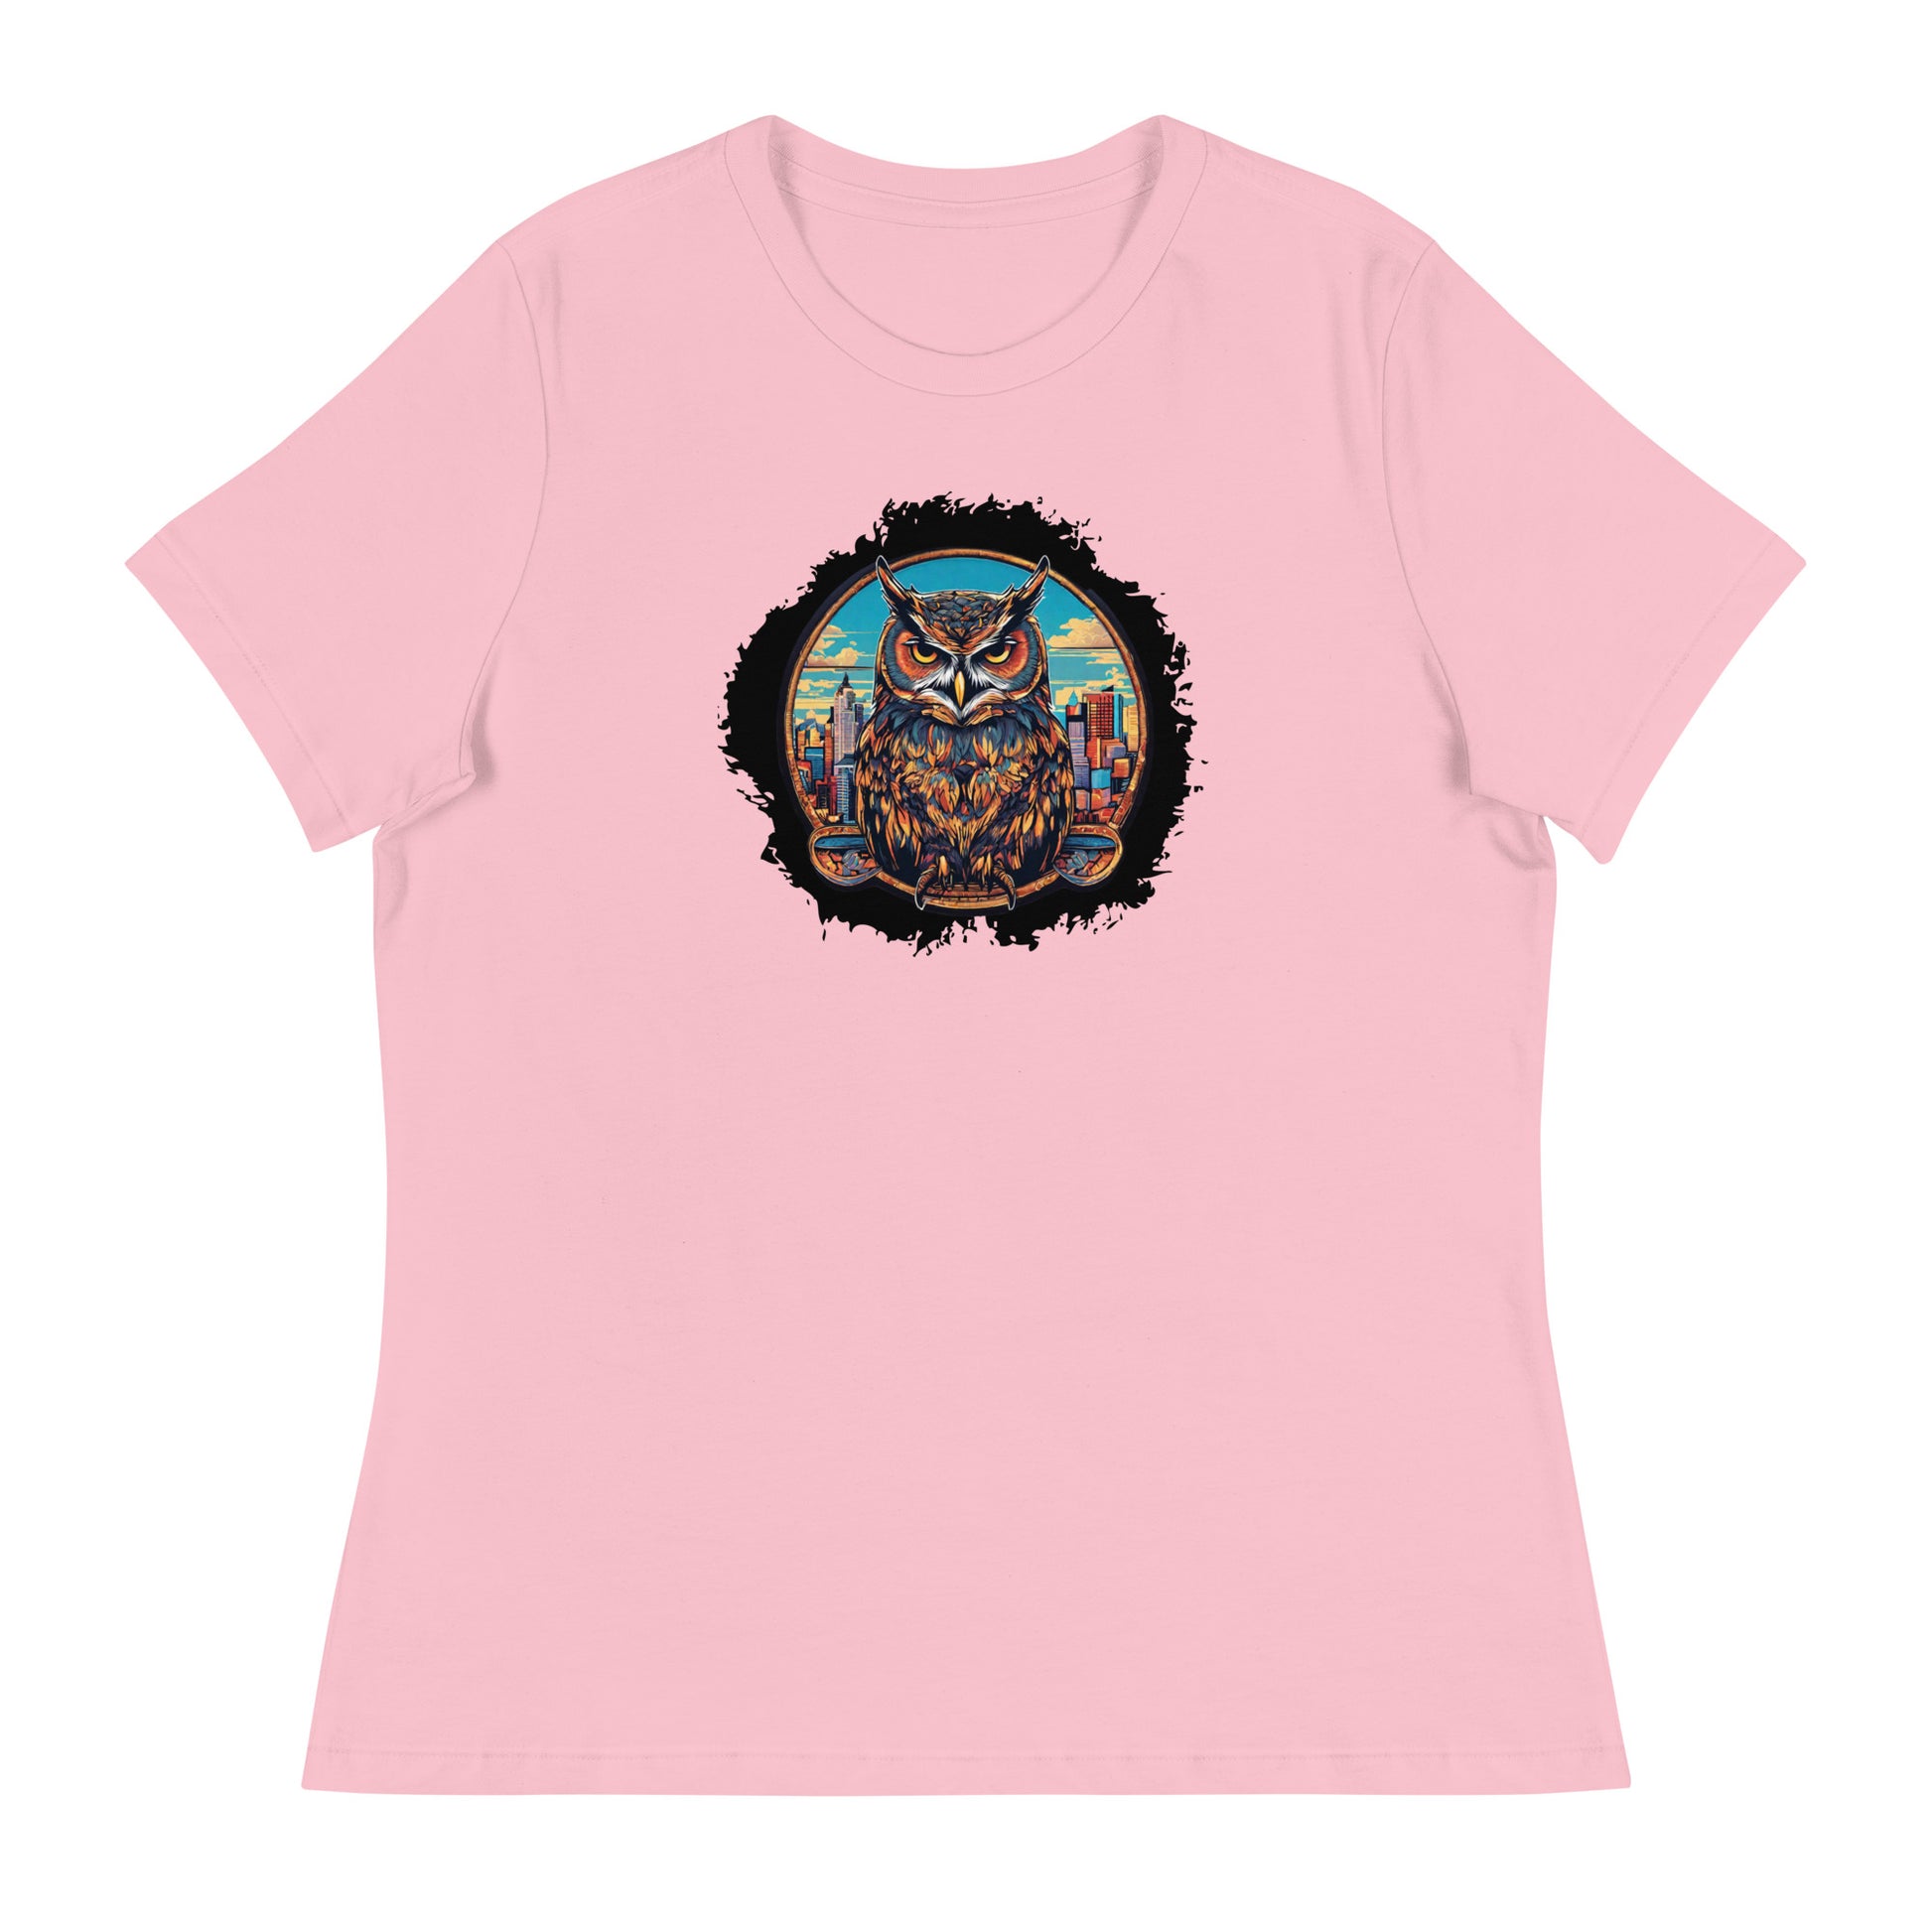 Owl in the City Emblem Women's T-Shirt Pink